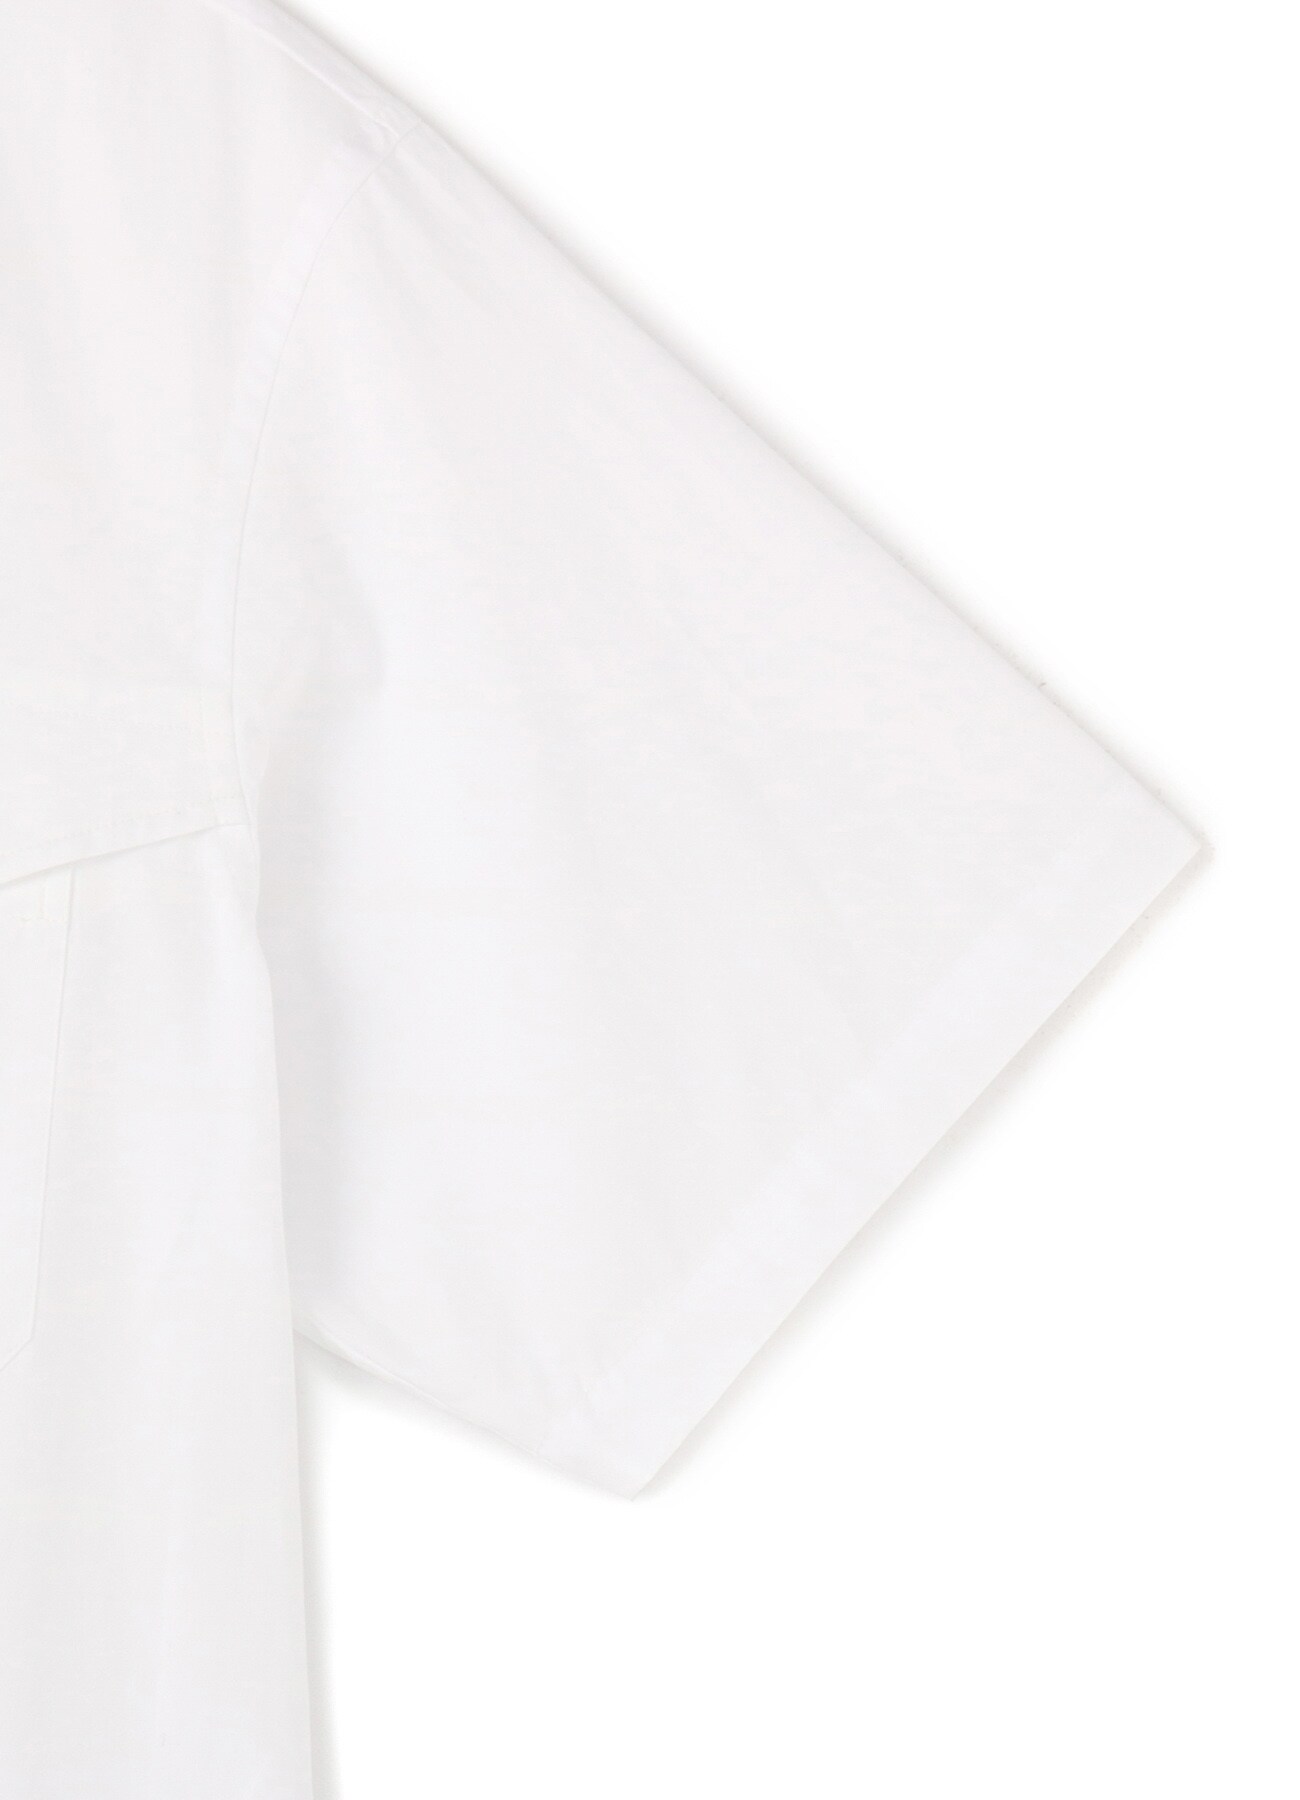 100/2 cotton broad Flap open collar shirt